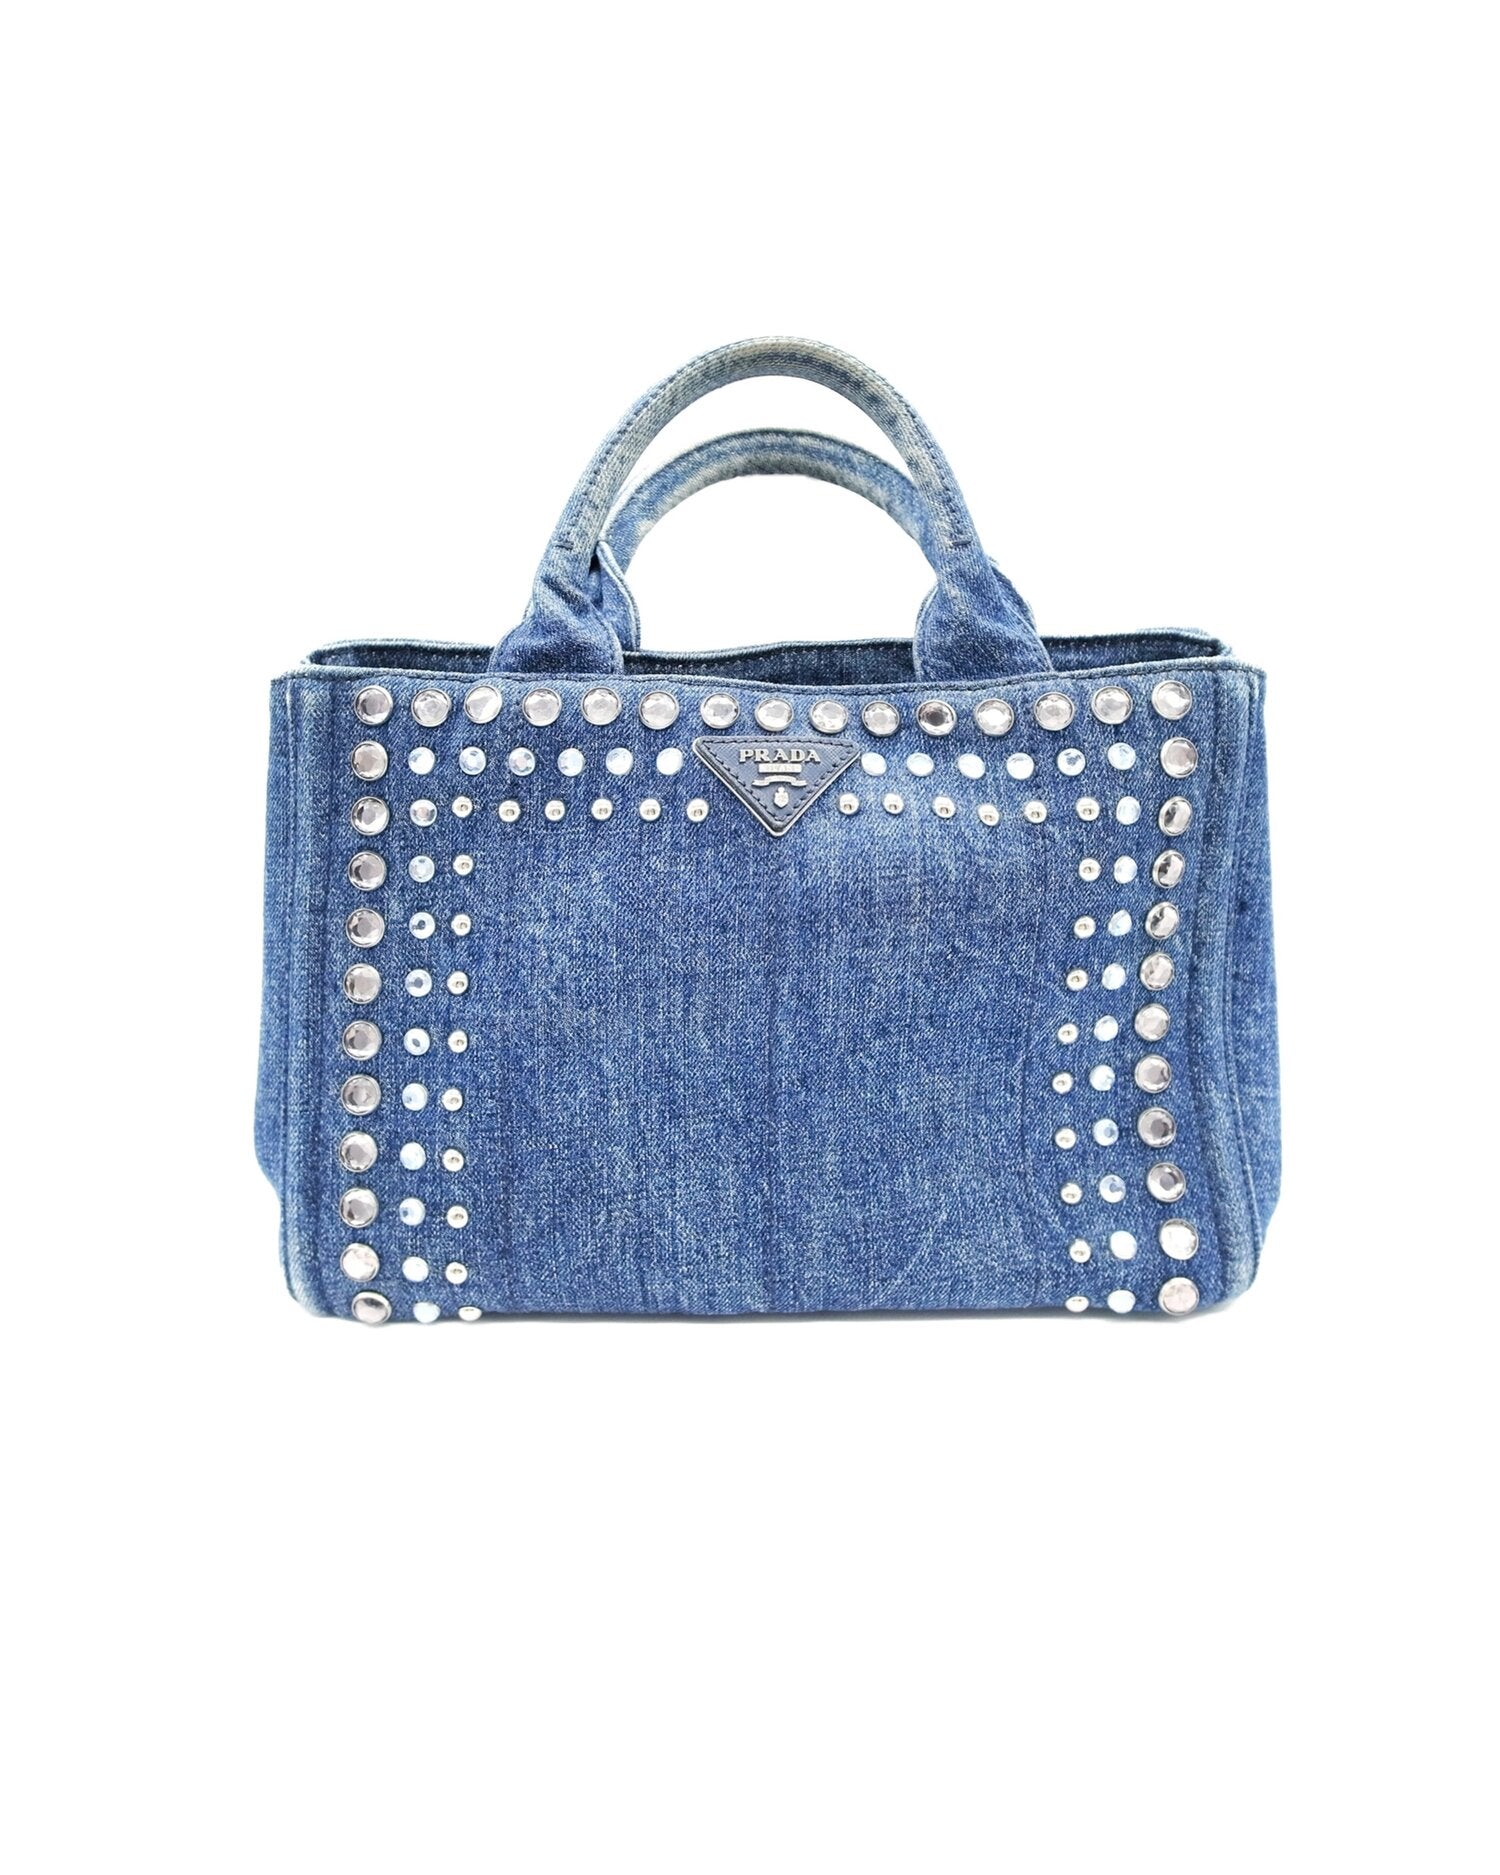 Prada Pattina Sottospalla Denim Fringe Large Flap Bag - Consigned Designs